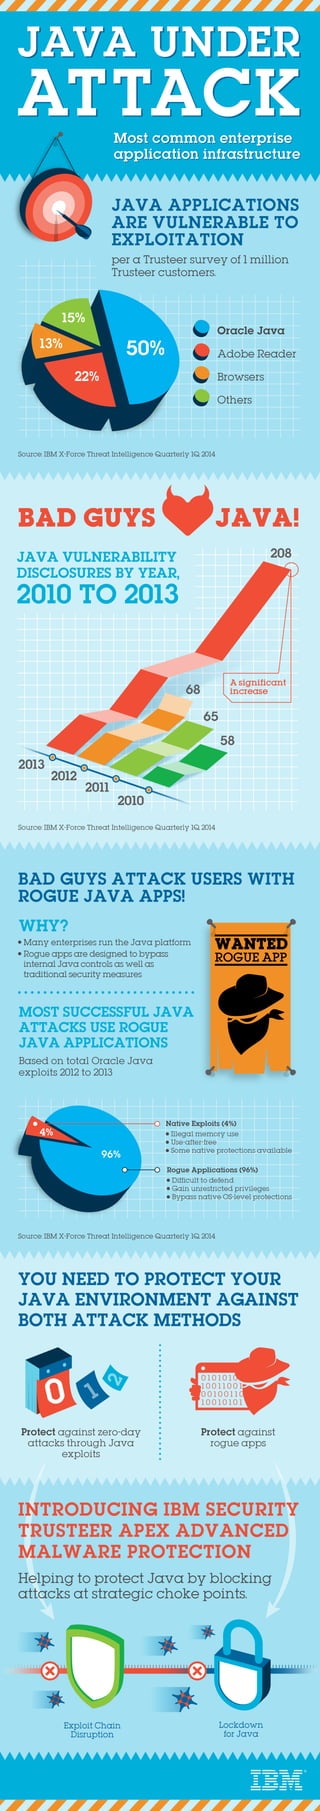 INFOGRAPHIC: Java under Attack